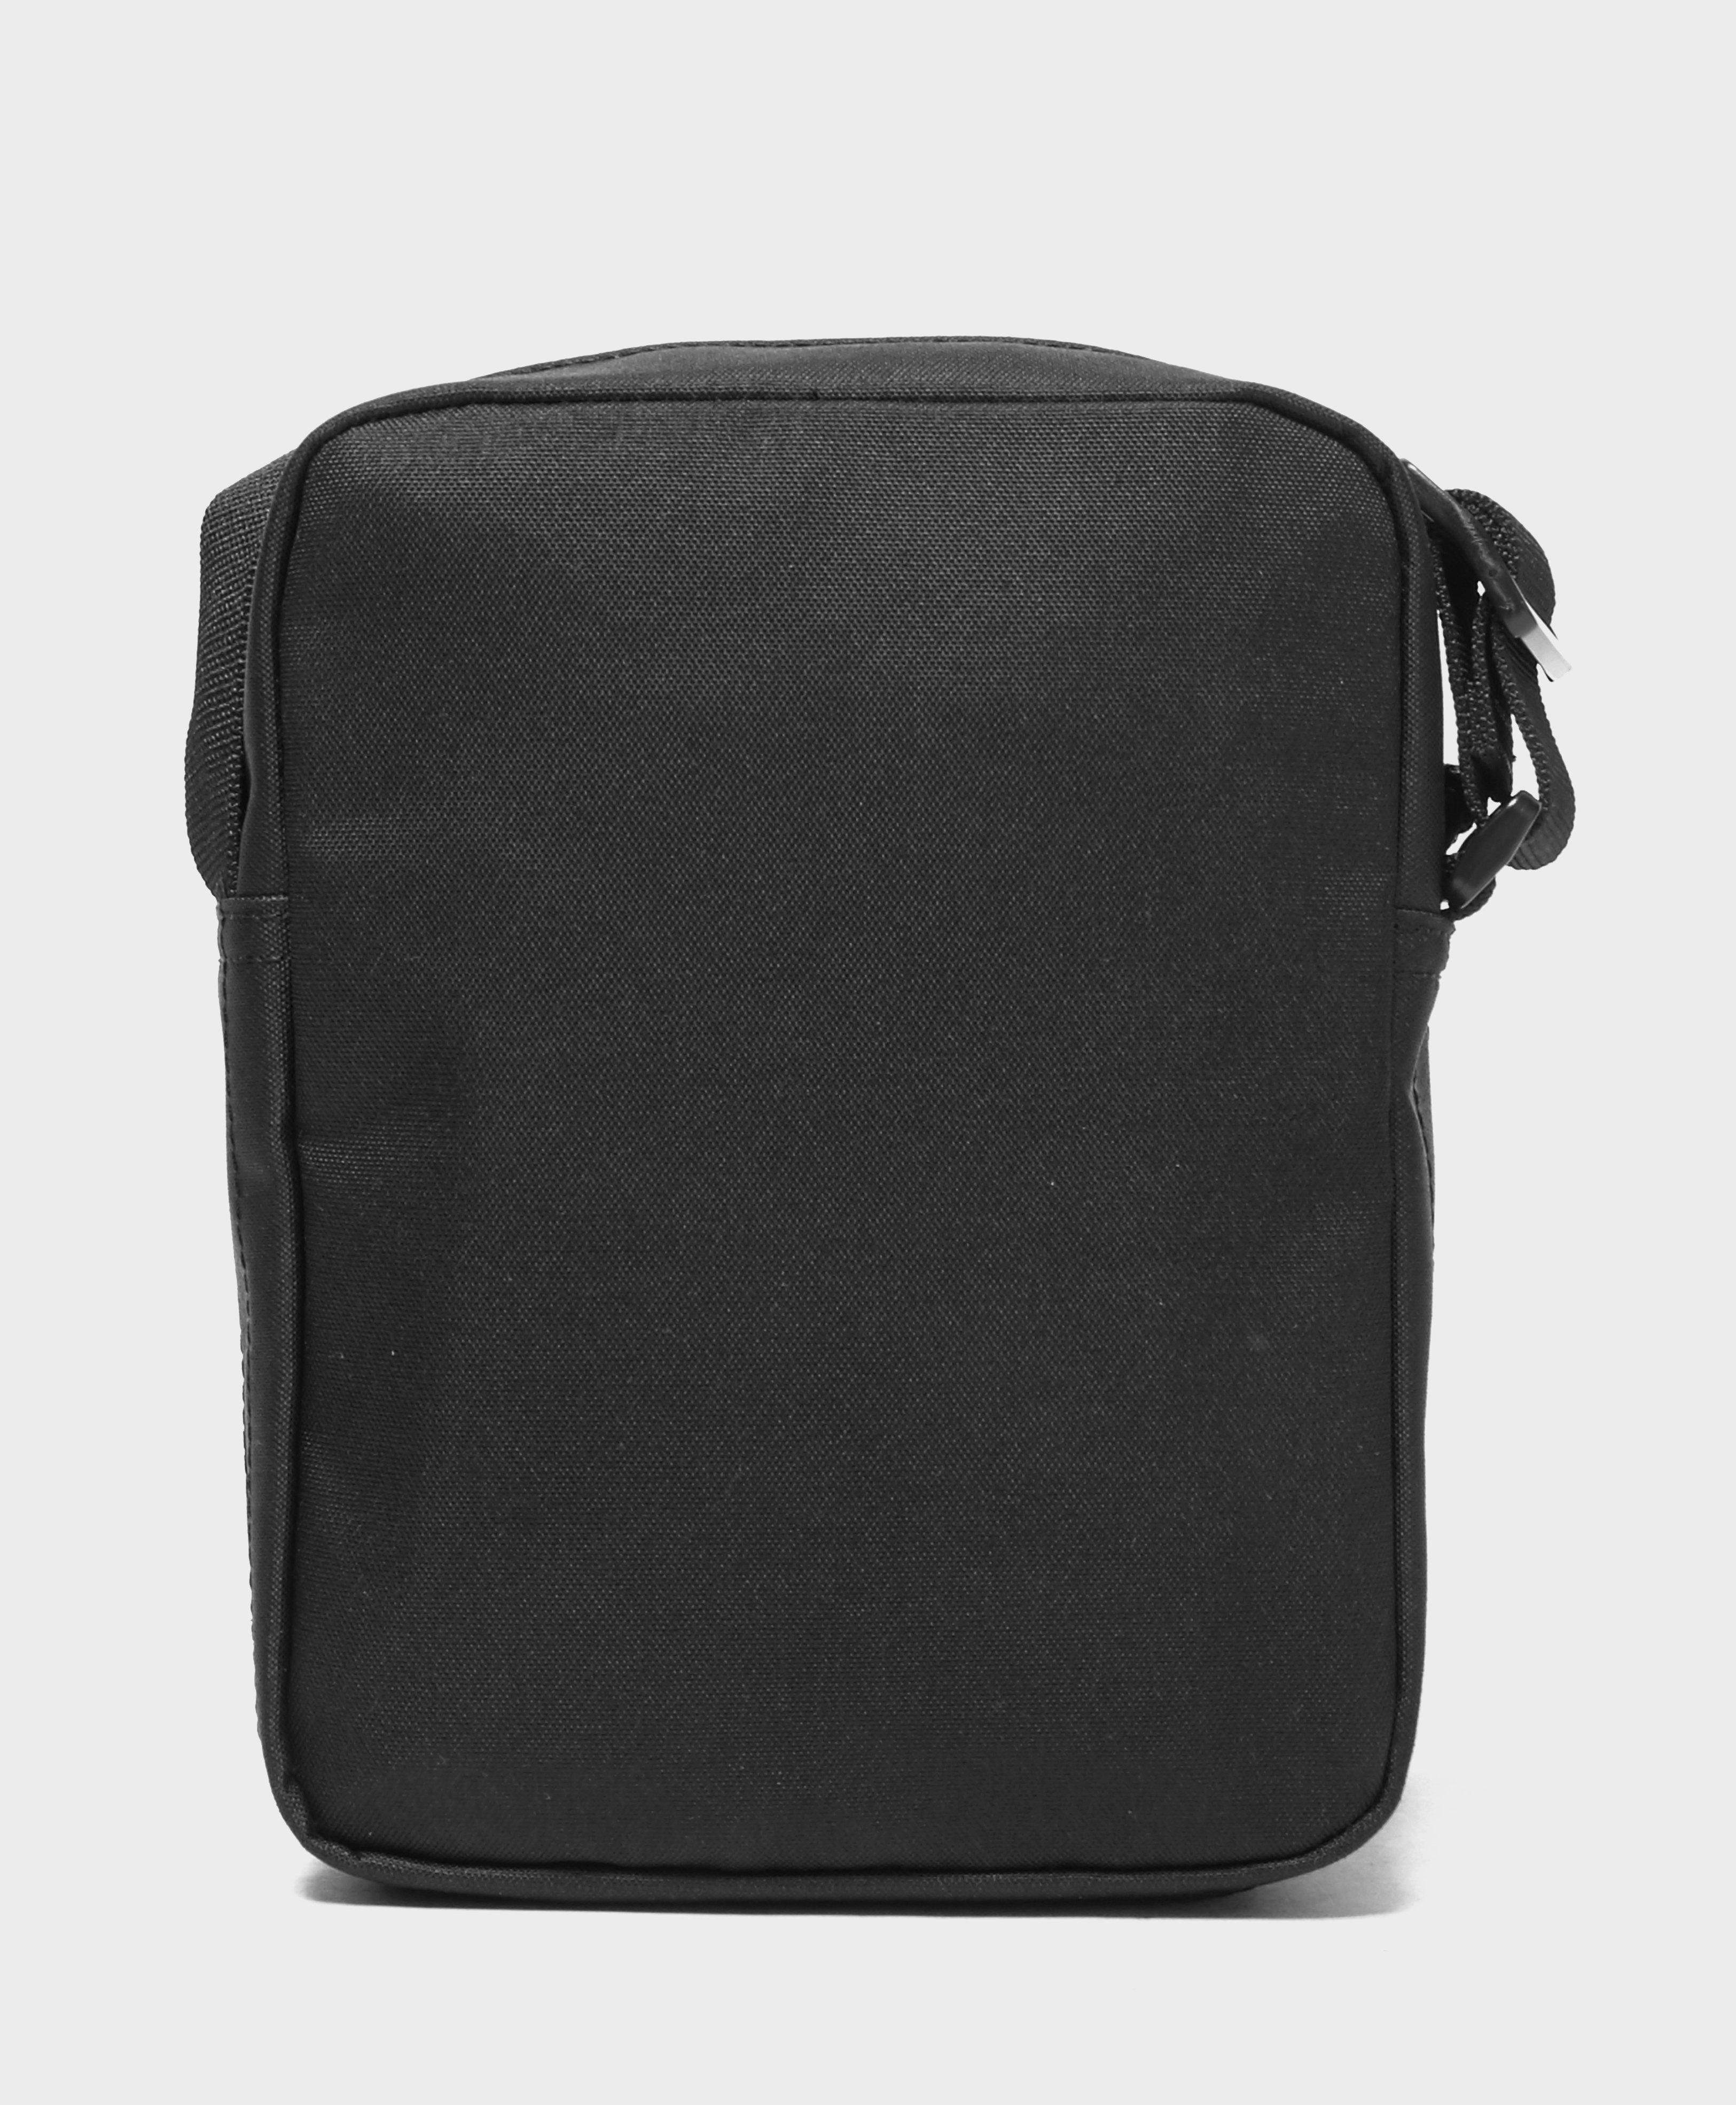 Lyst - Lacoste Mini Bag in Black for Men